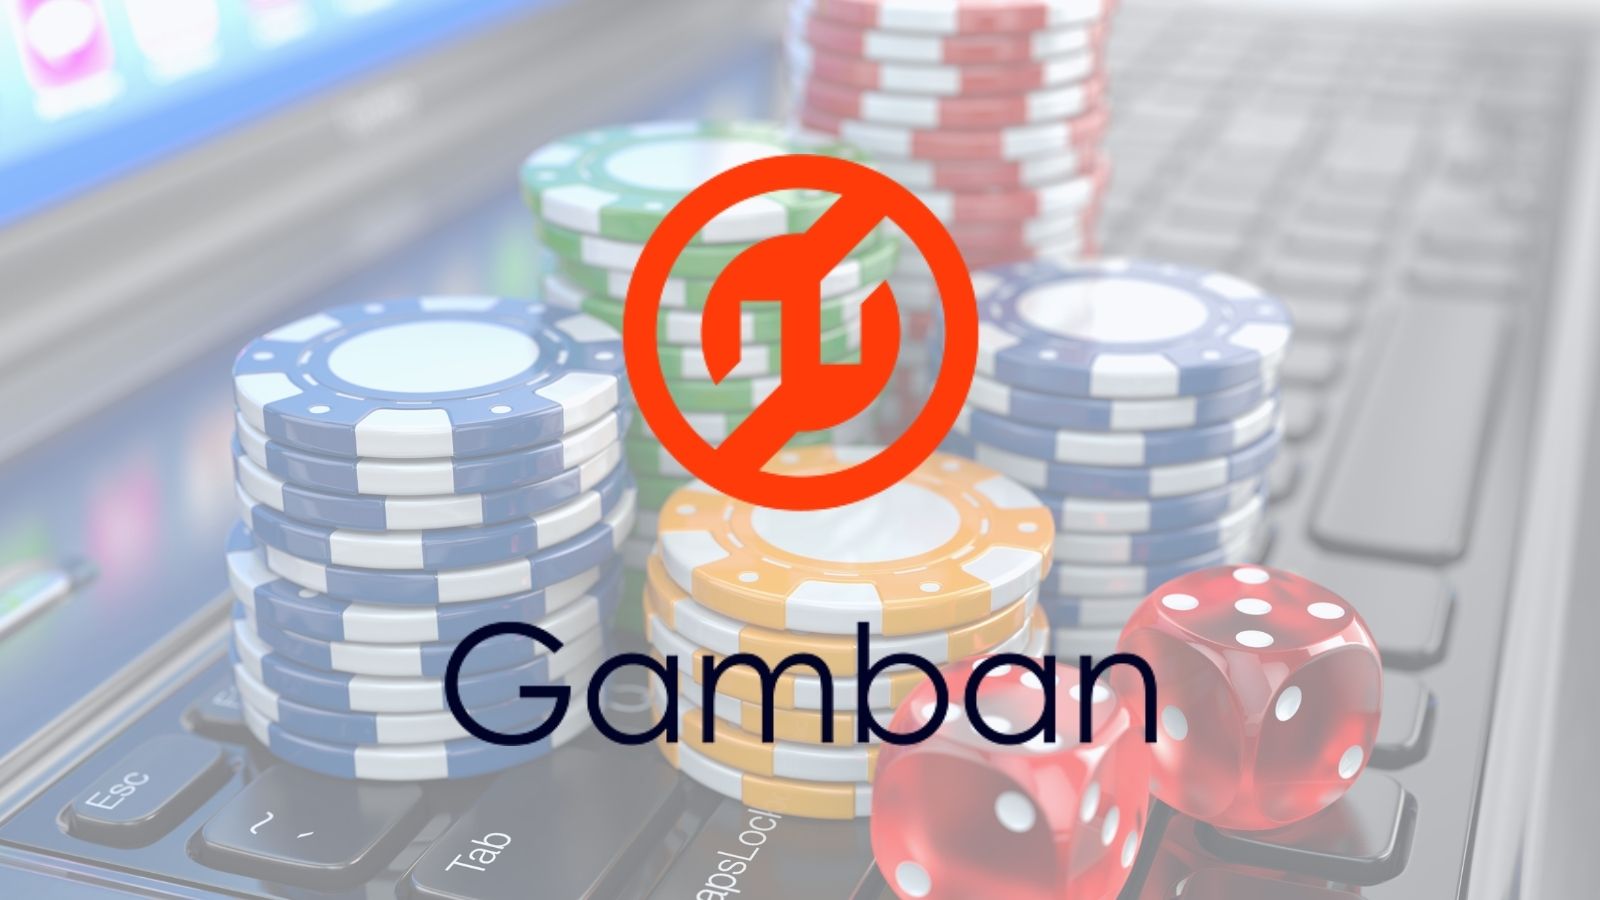 What Banks Allow Online Gambling?